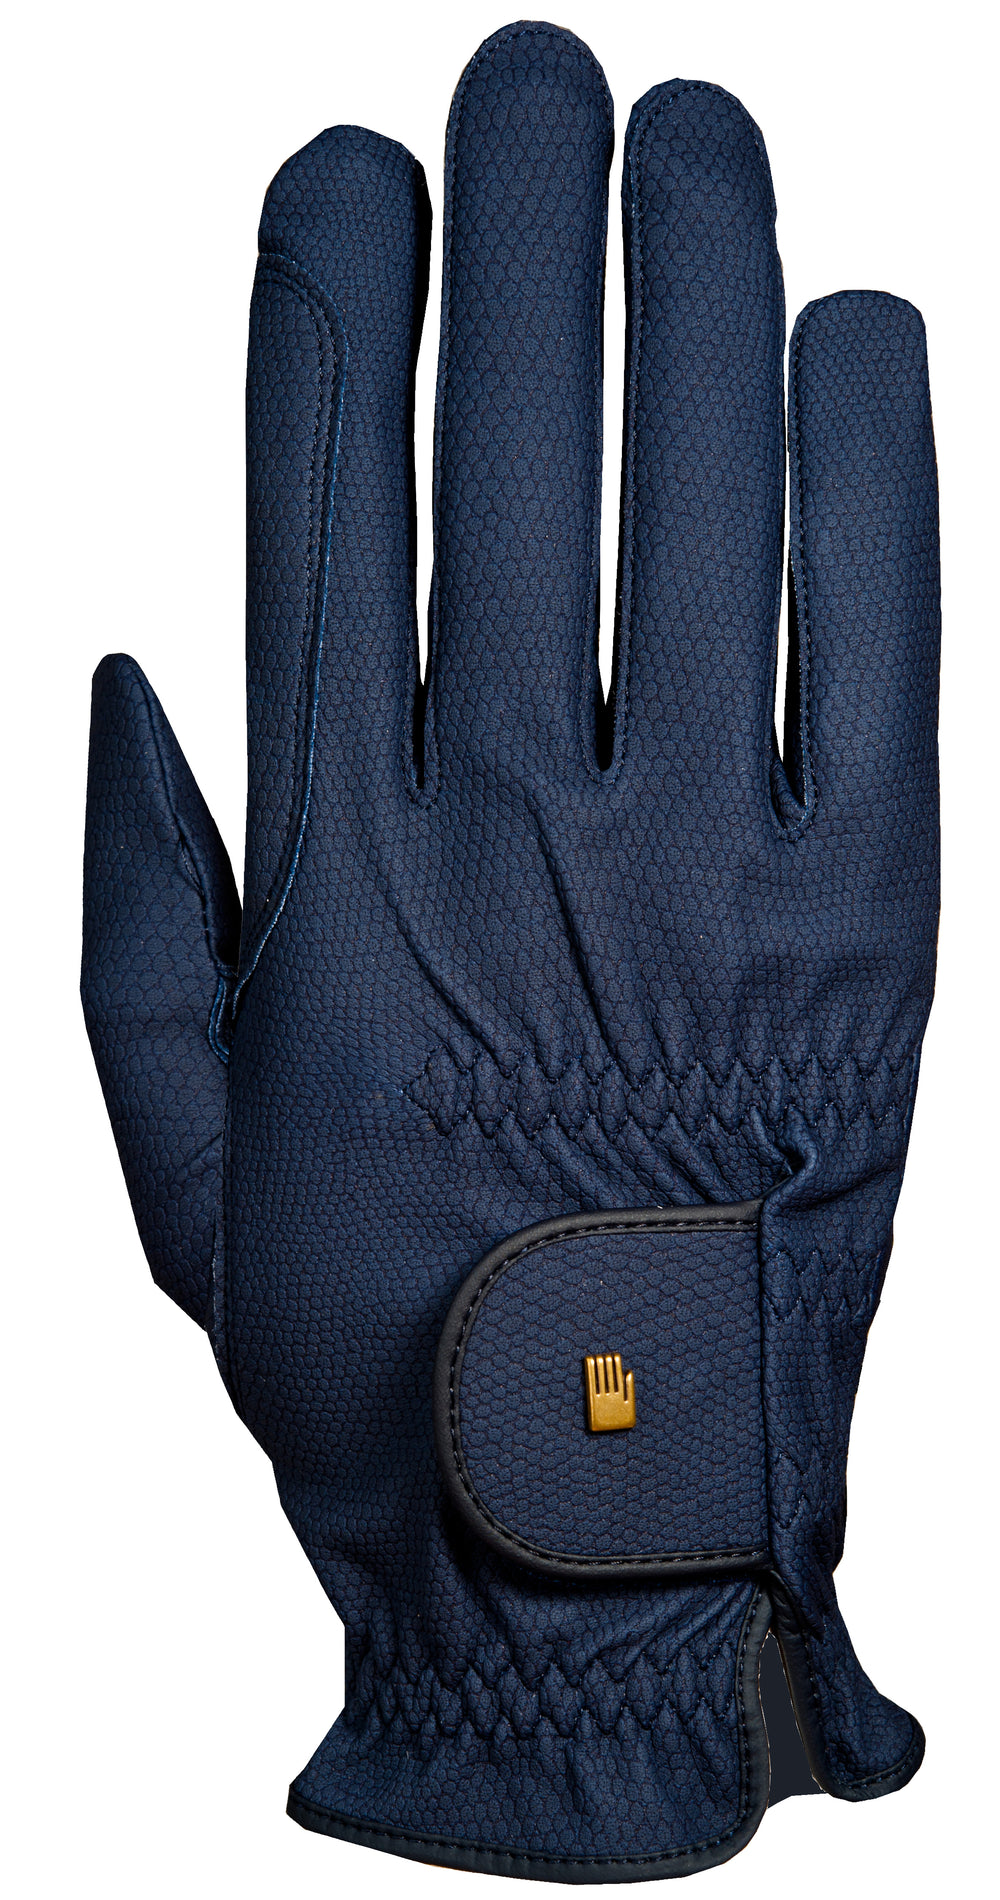 Roeckl Roeck-Grip Unisex Riding Gloves - Navy Blue